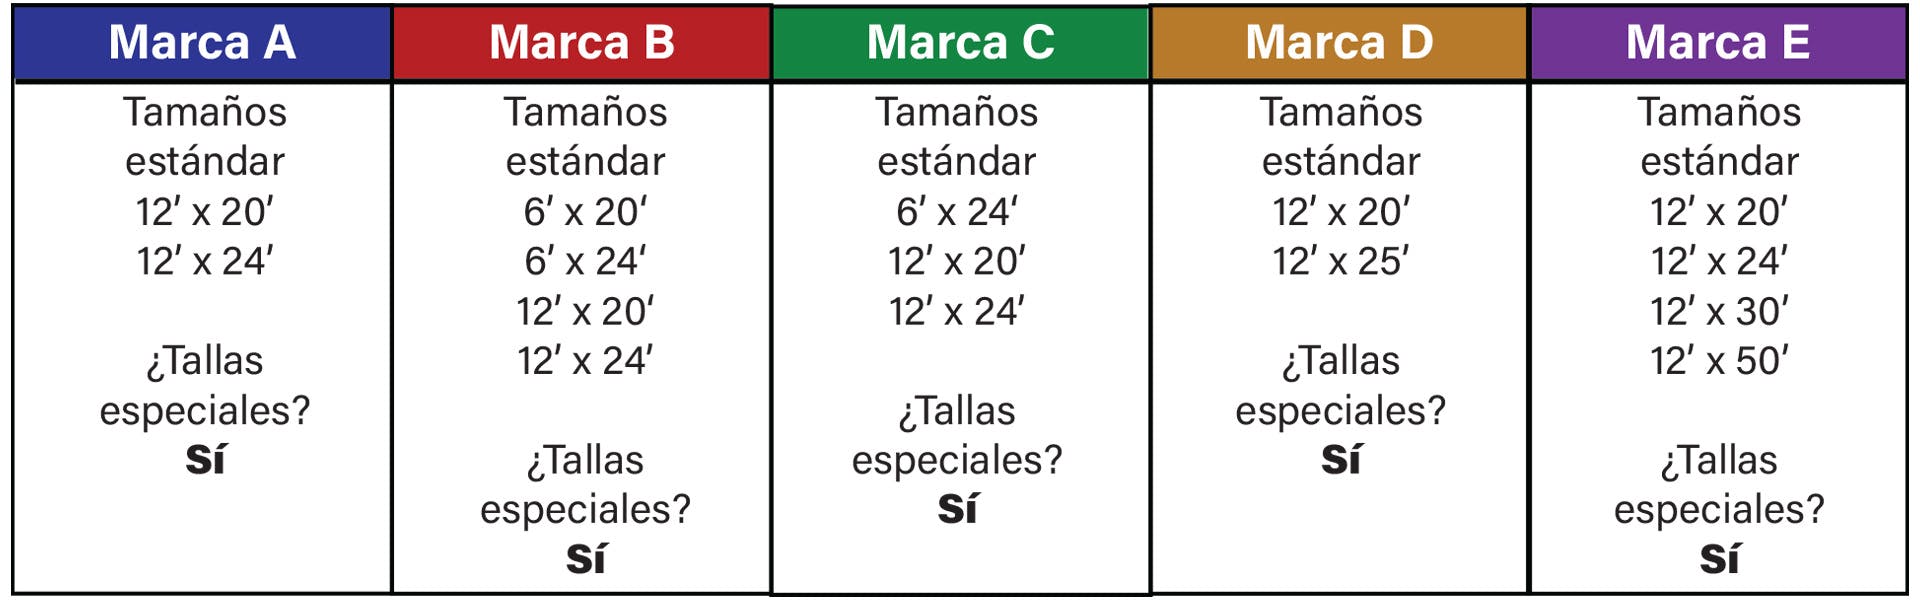 article image insulated tarps brand table spanish language